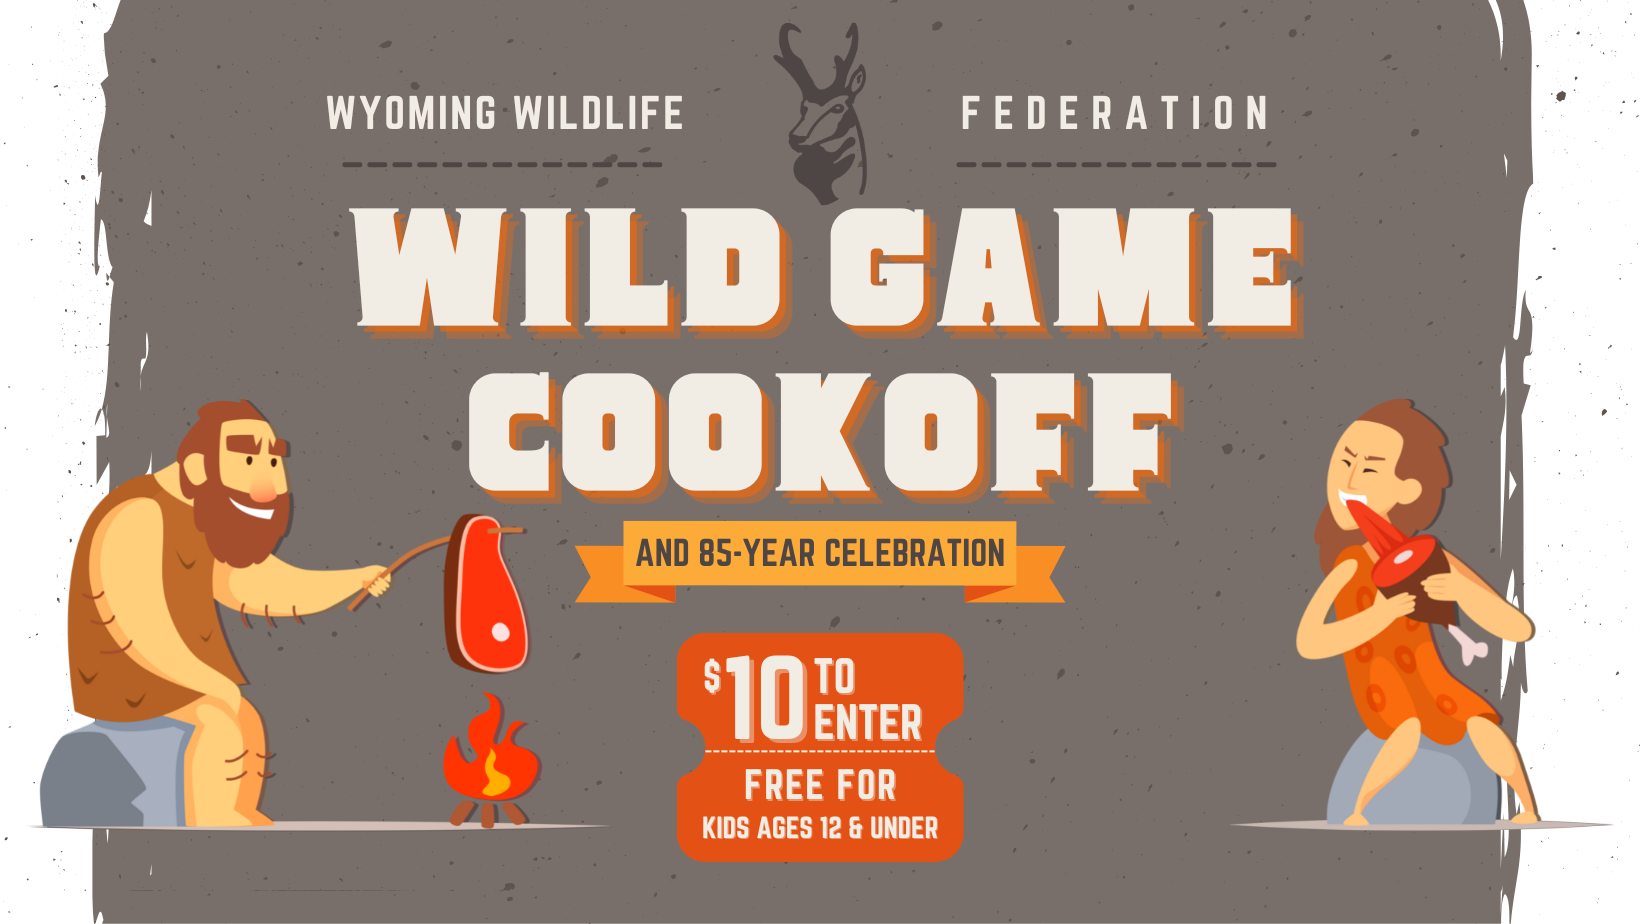 Wyoming Wildlife Federation Cookoff & 85-Year Celebration